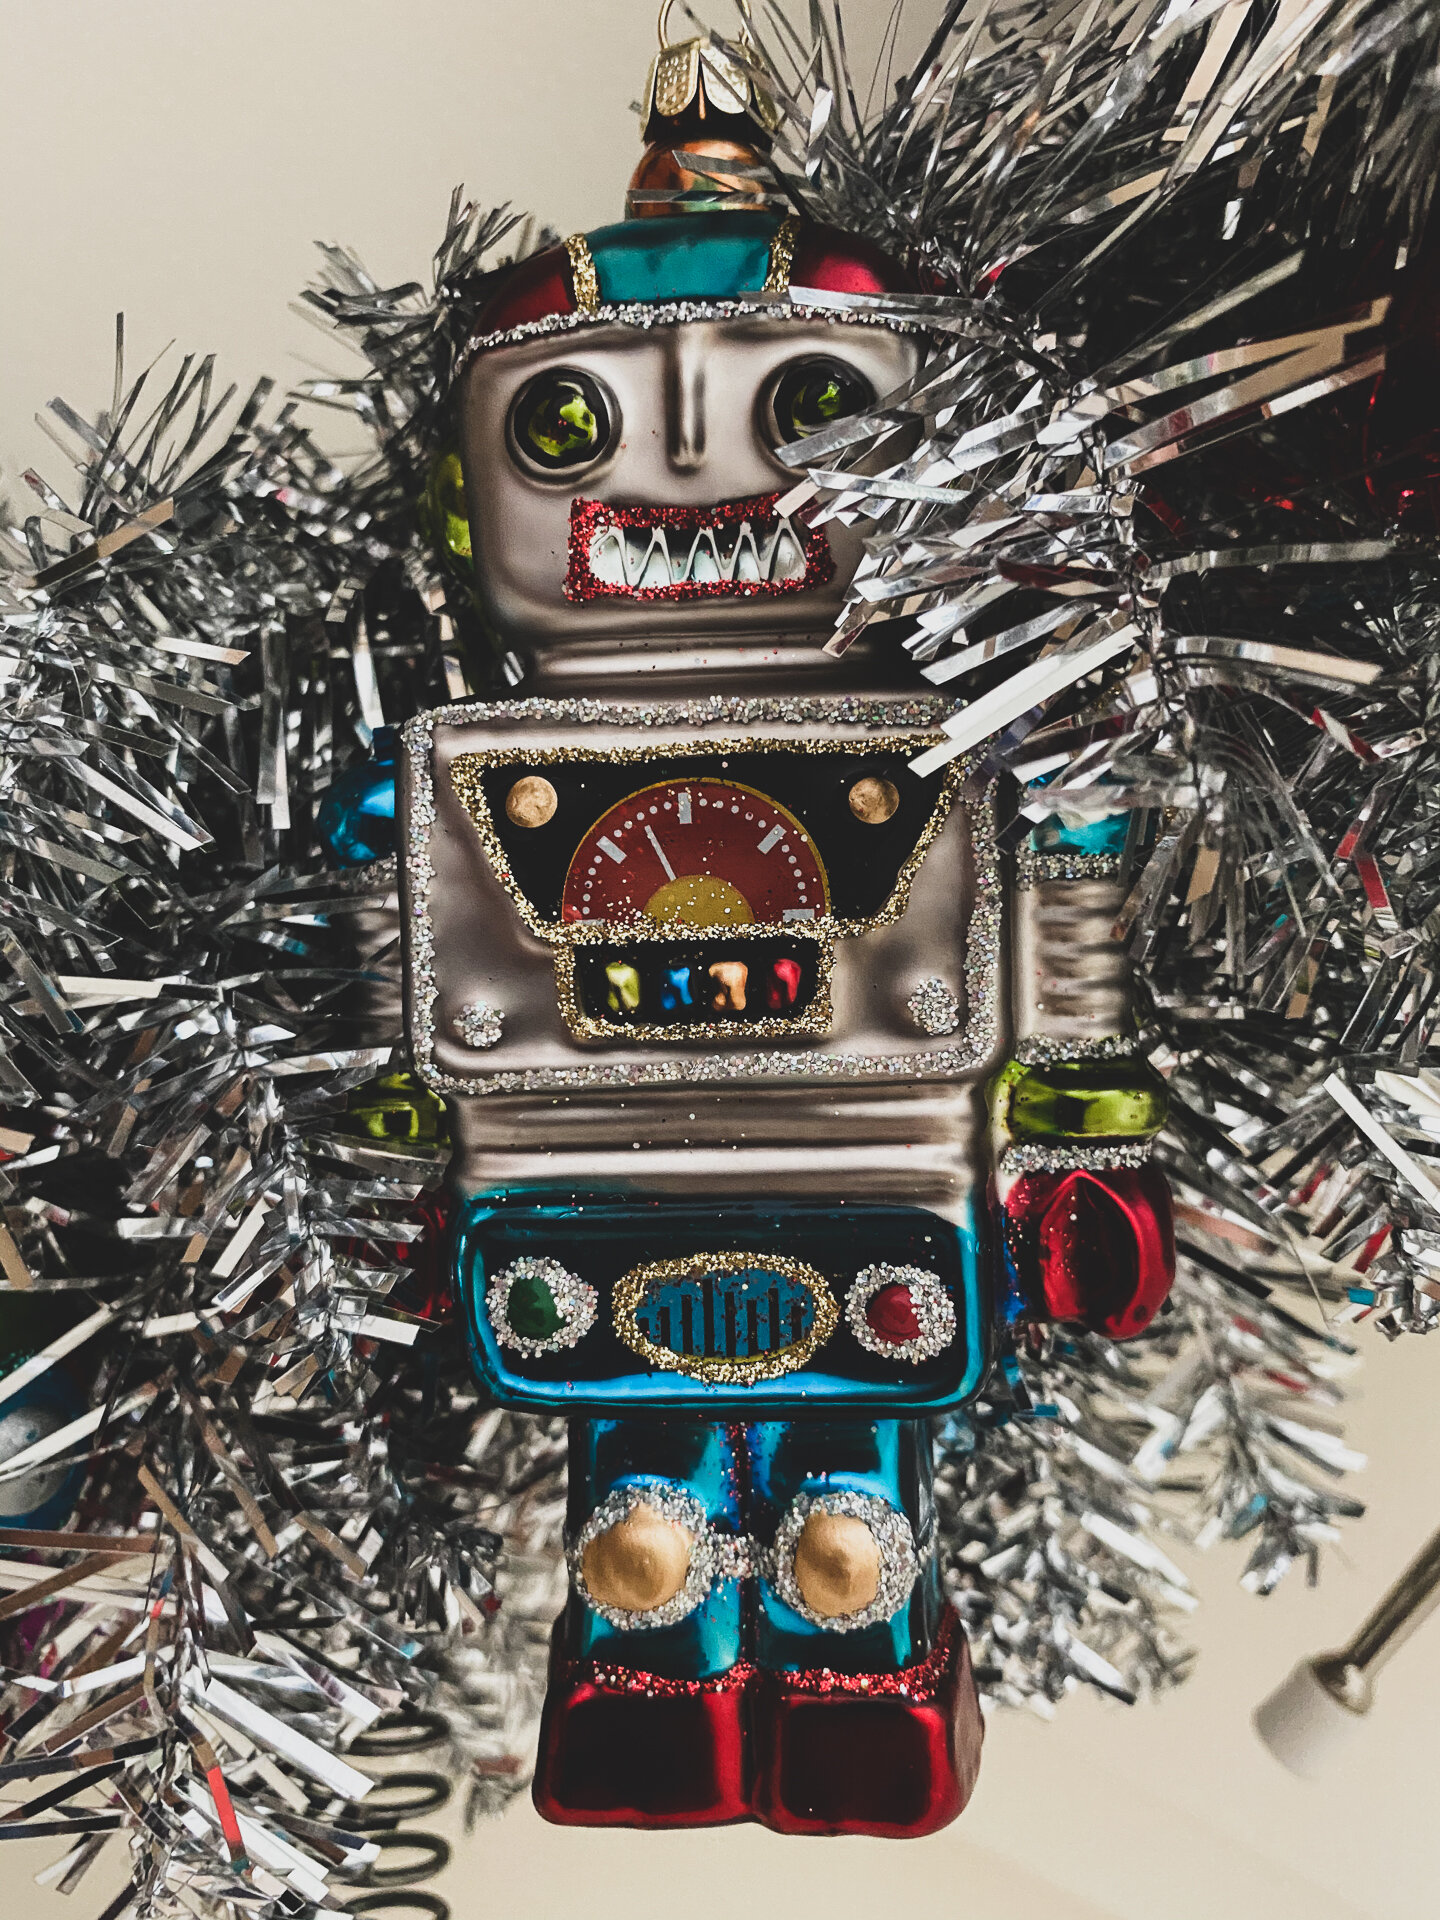 Robot Wreath by Kiriosities-14.jpg